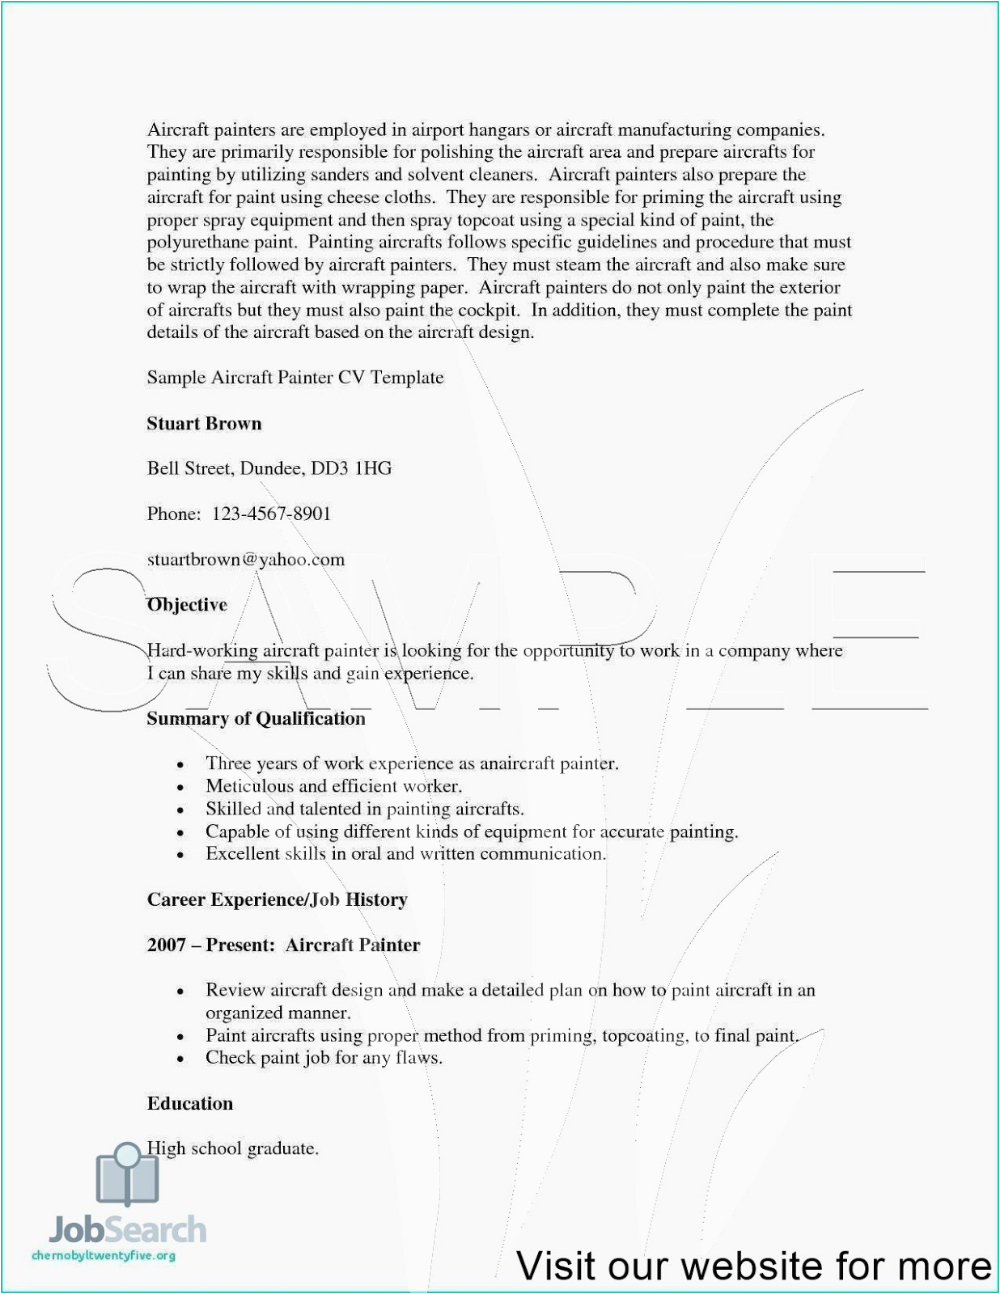 Sample Resume Objective for Child Care Sample Child Care Resume Objectives Australia 2020 In 2020